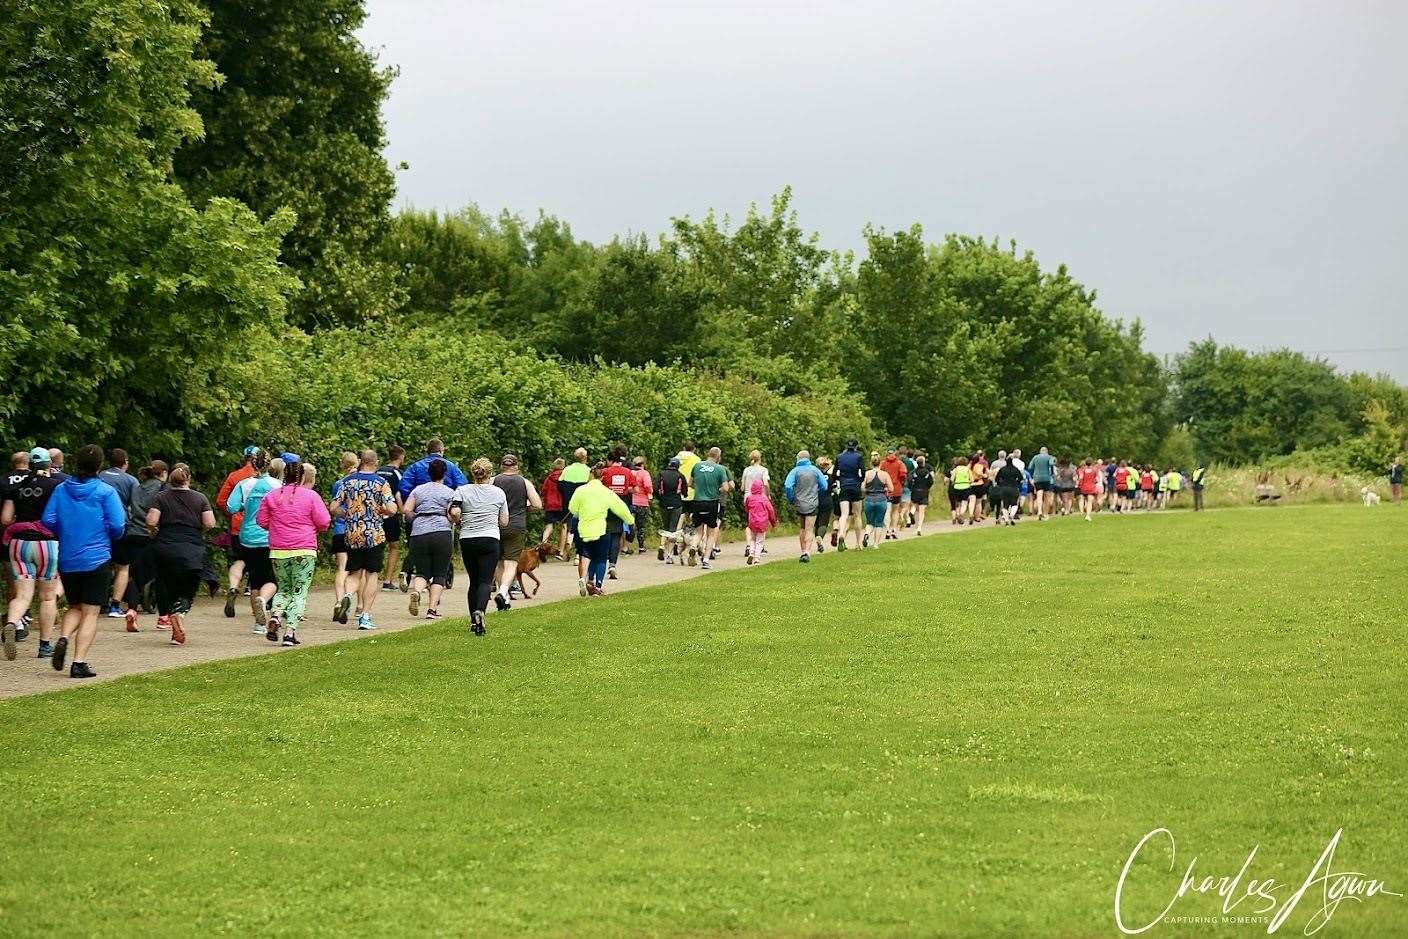 Sittingbourne's park runners setting off. Picture: Charles Agwu